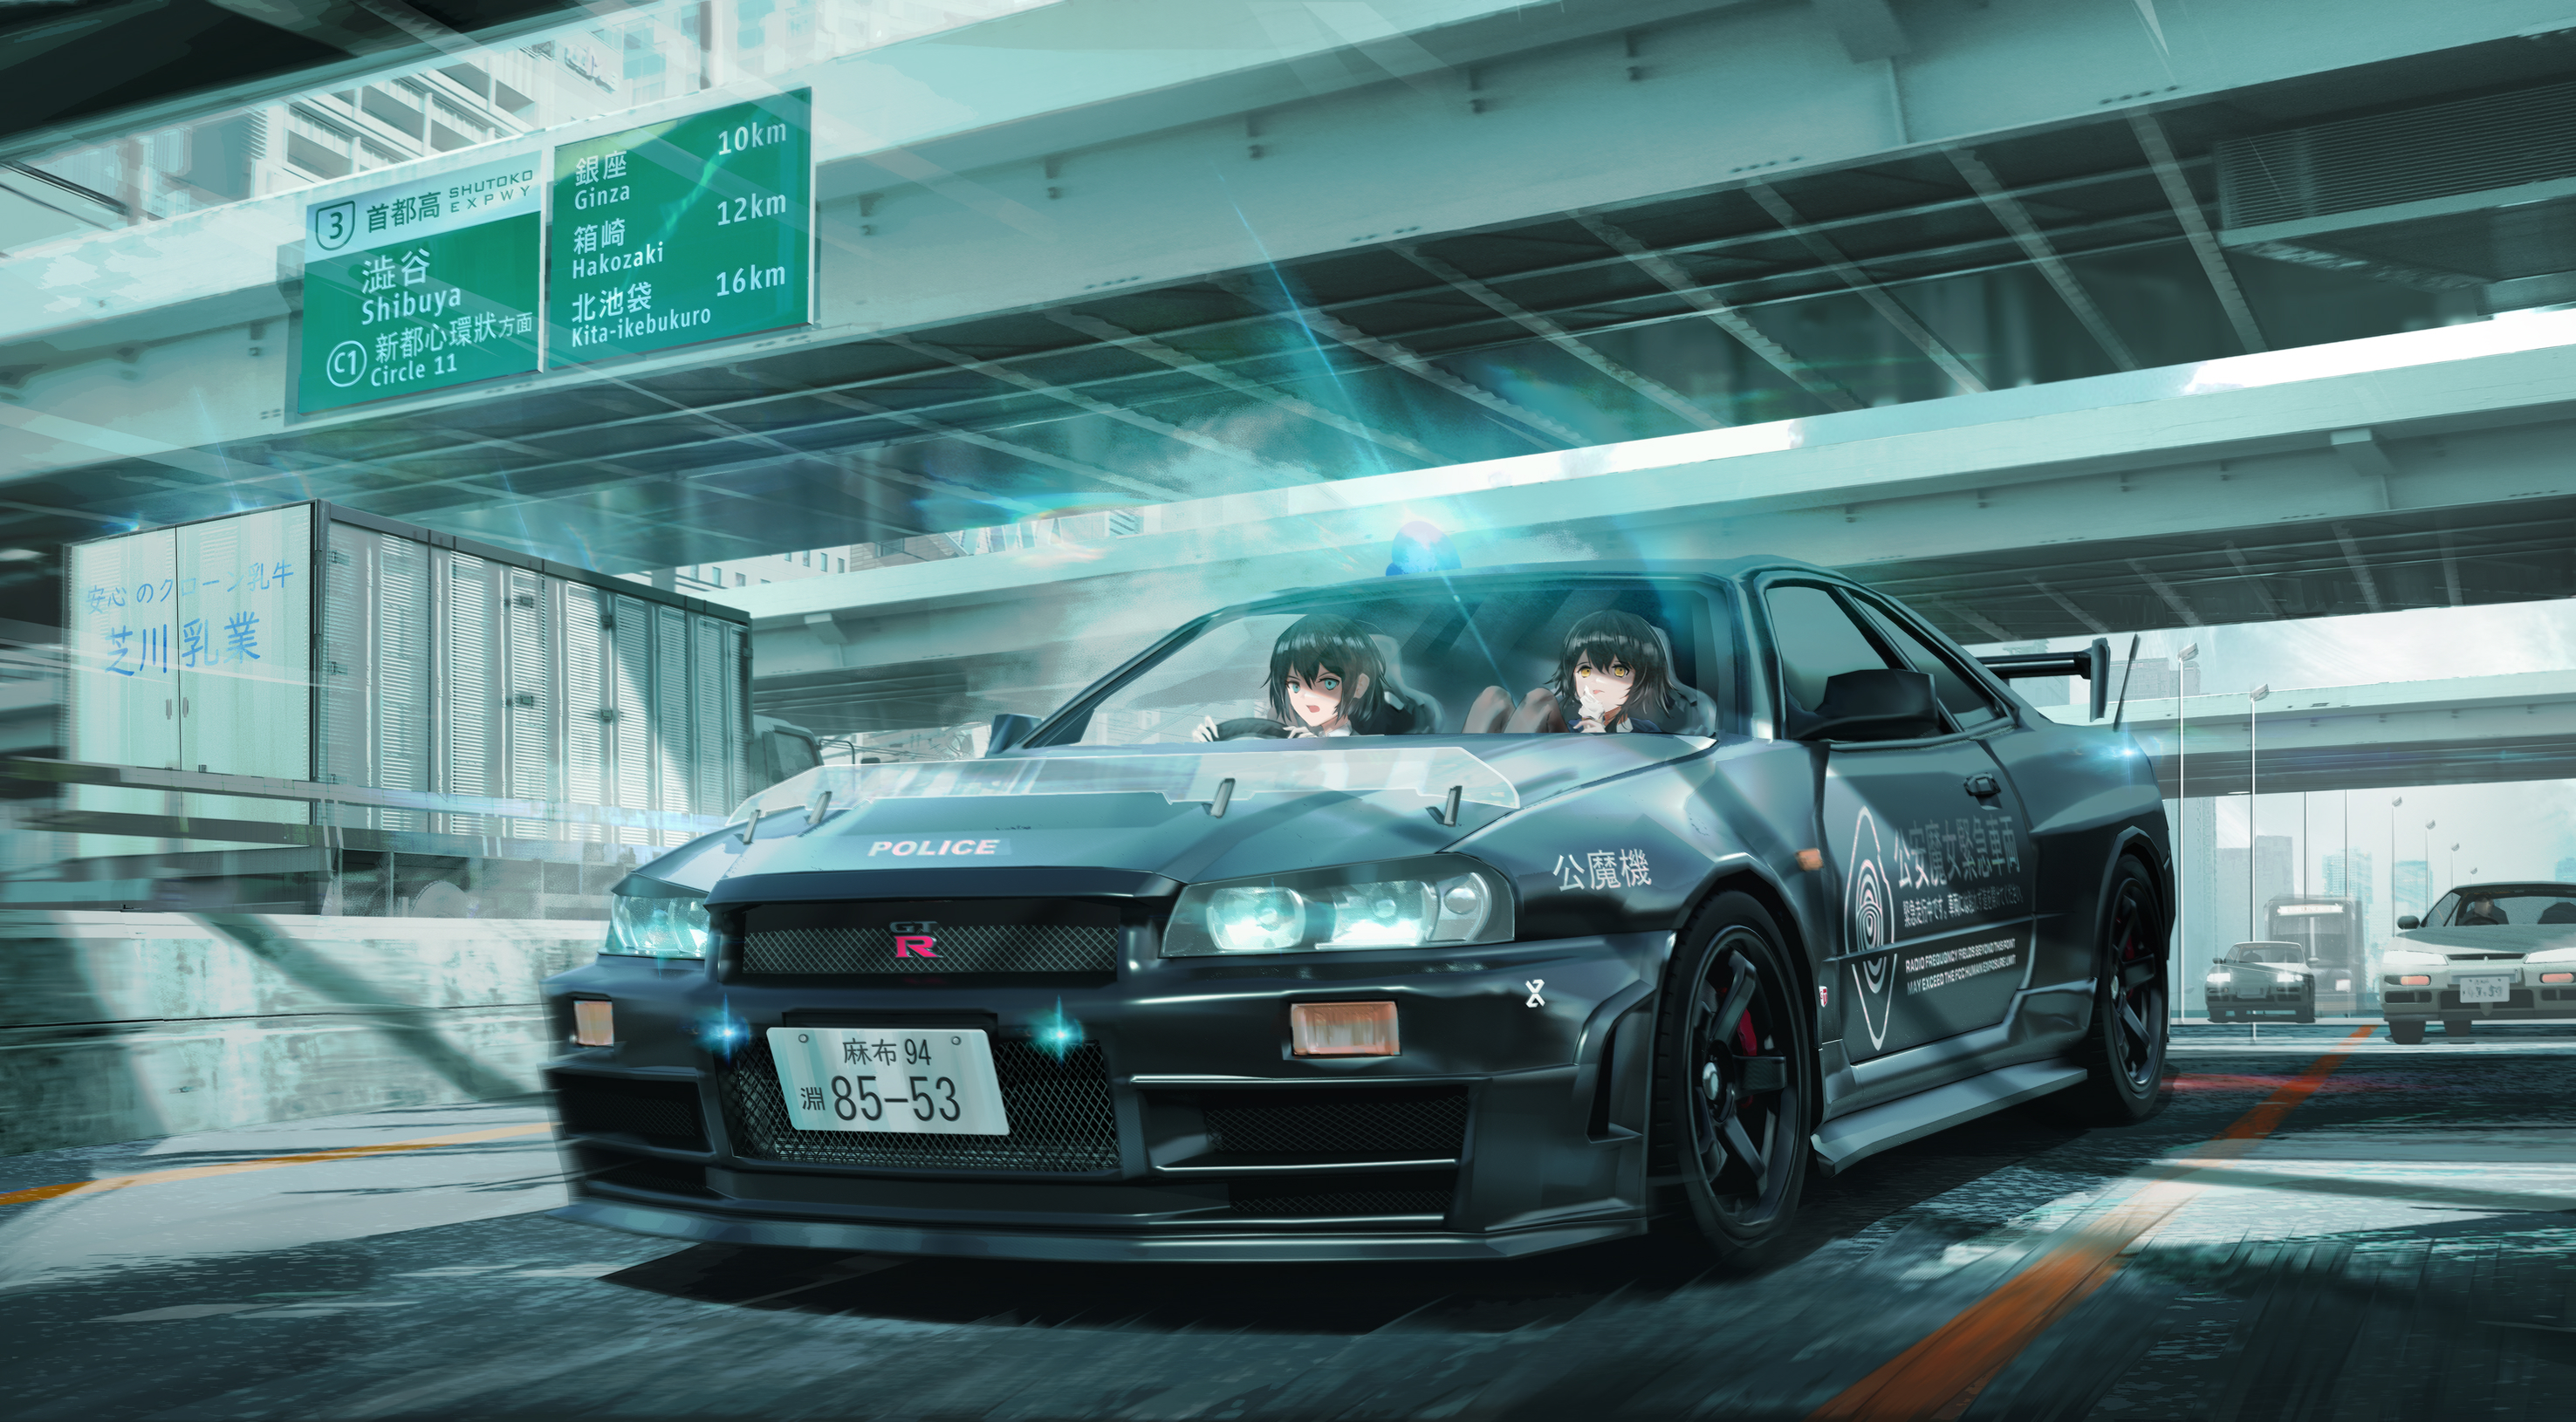 Anime Girl In Police Car Wallpapers